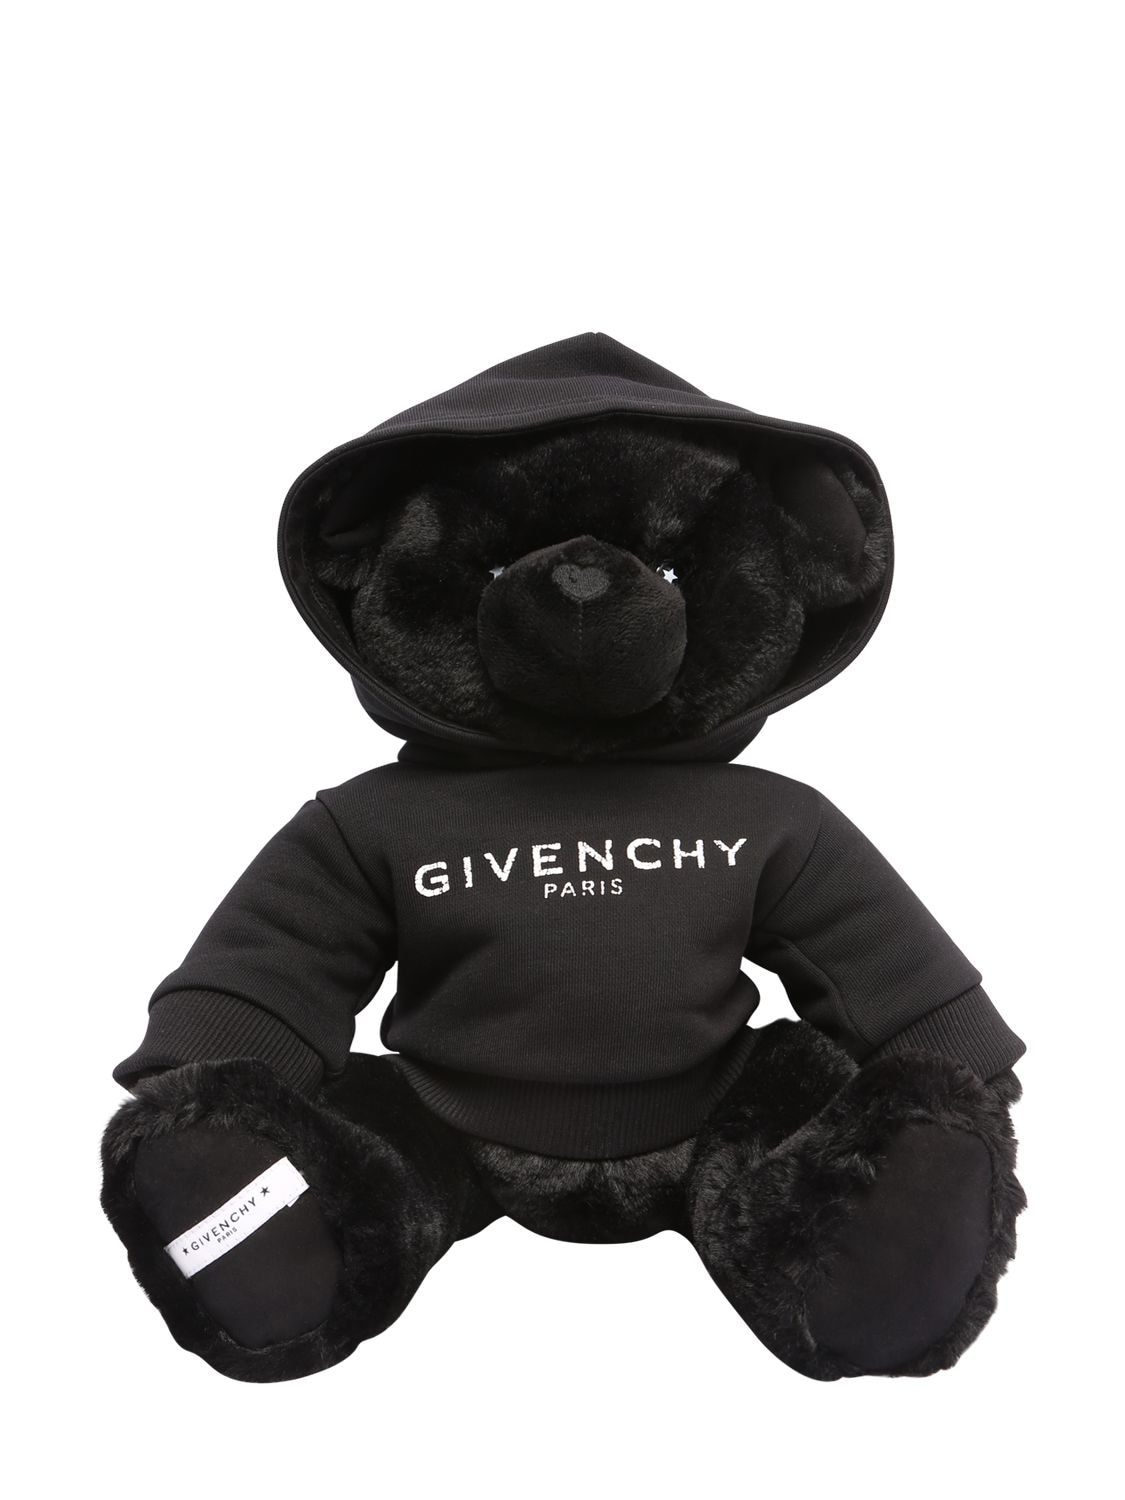 teddy bear black